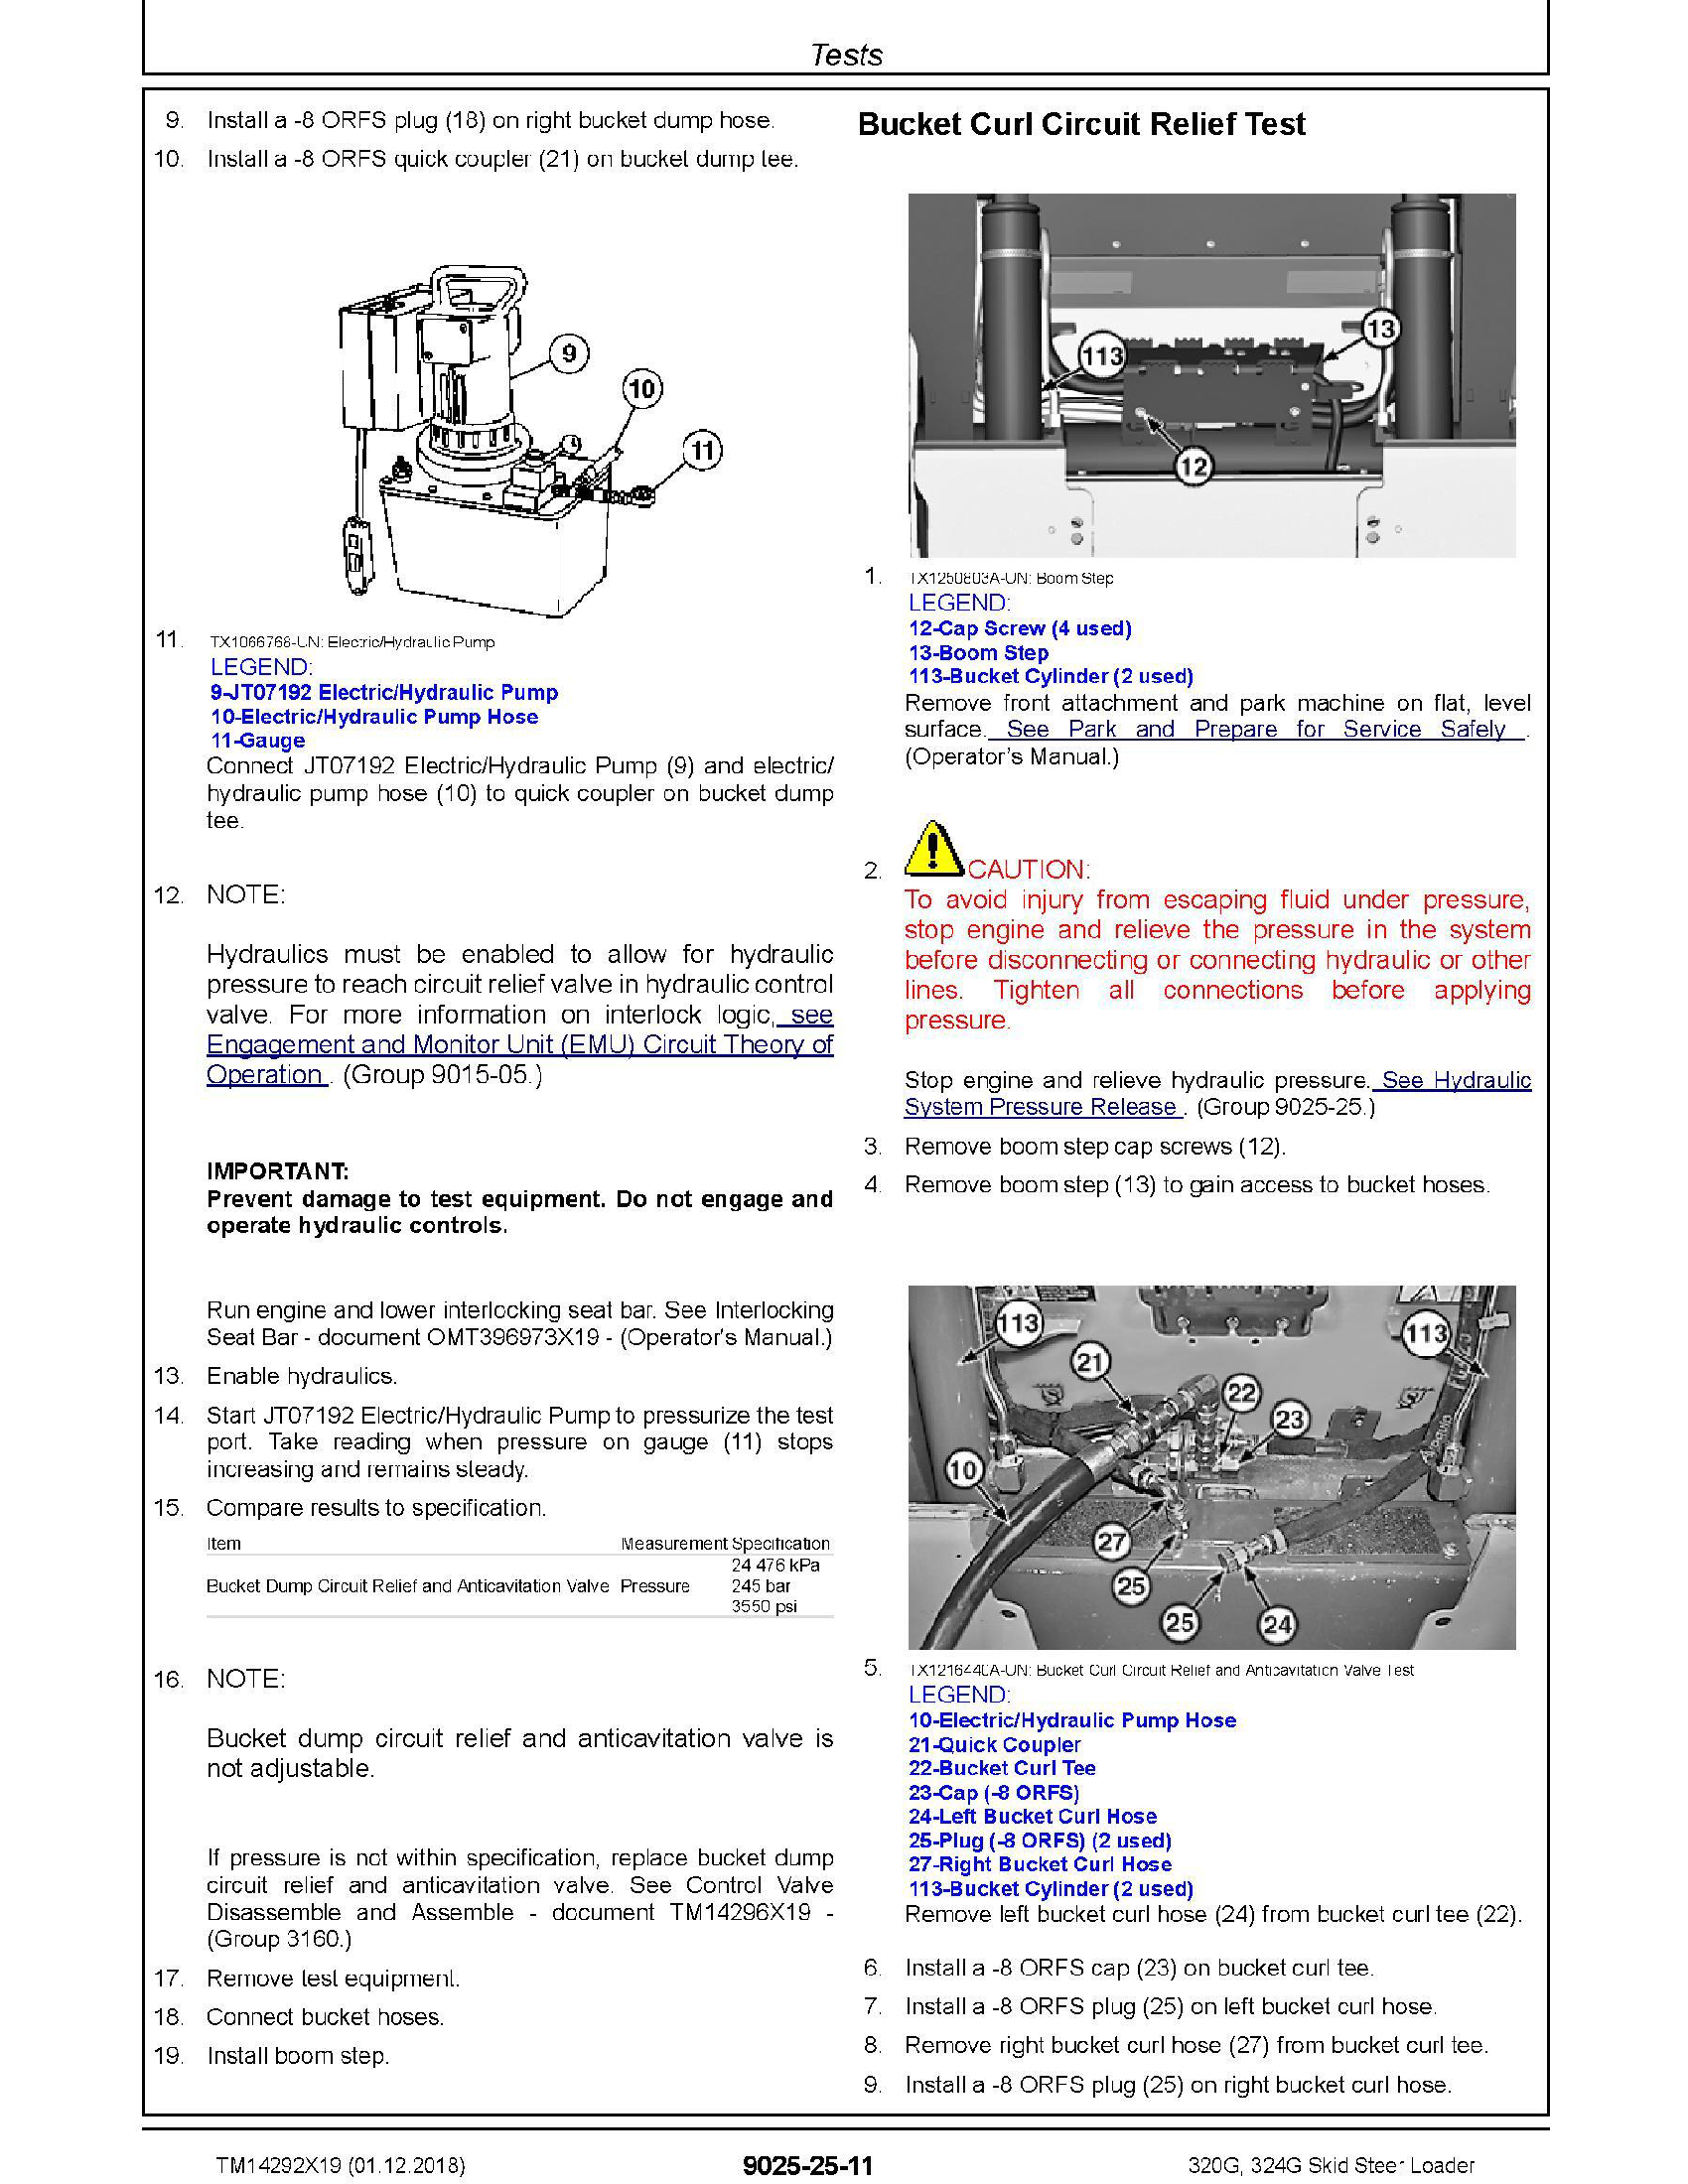 John Deere _G328658������� manual